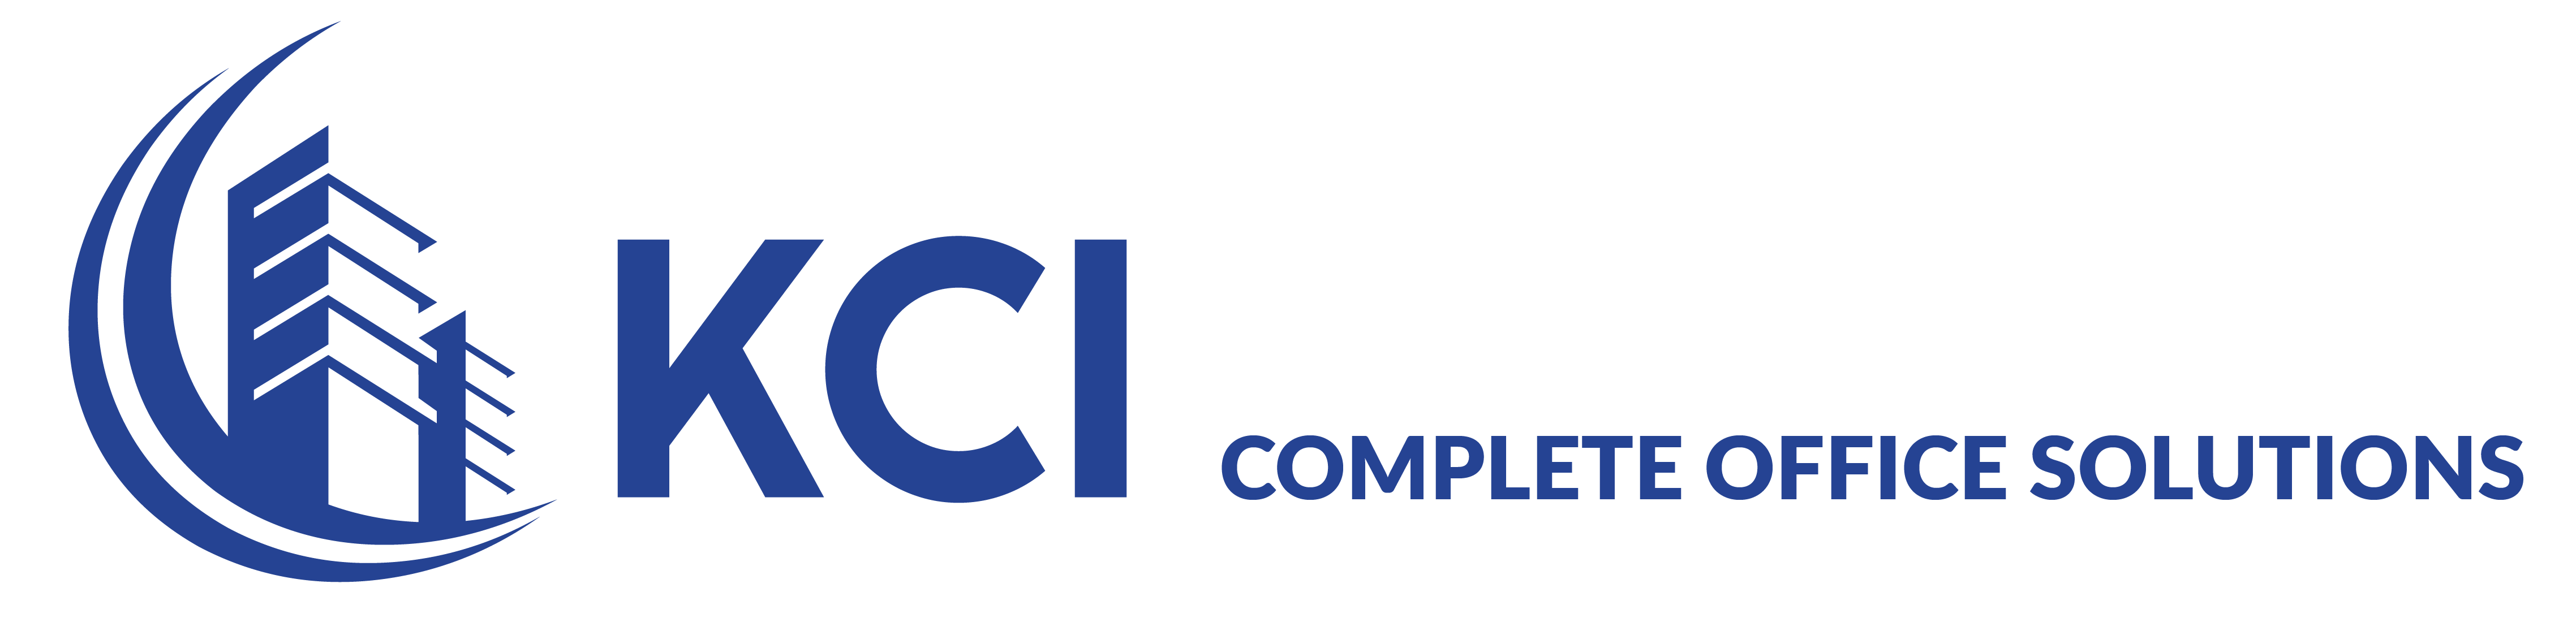 KCI Design and web logo